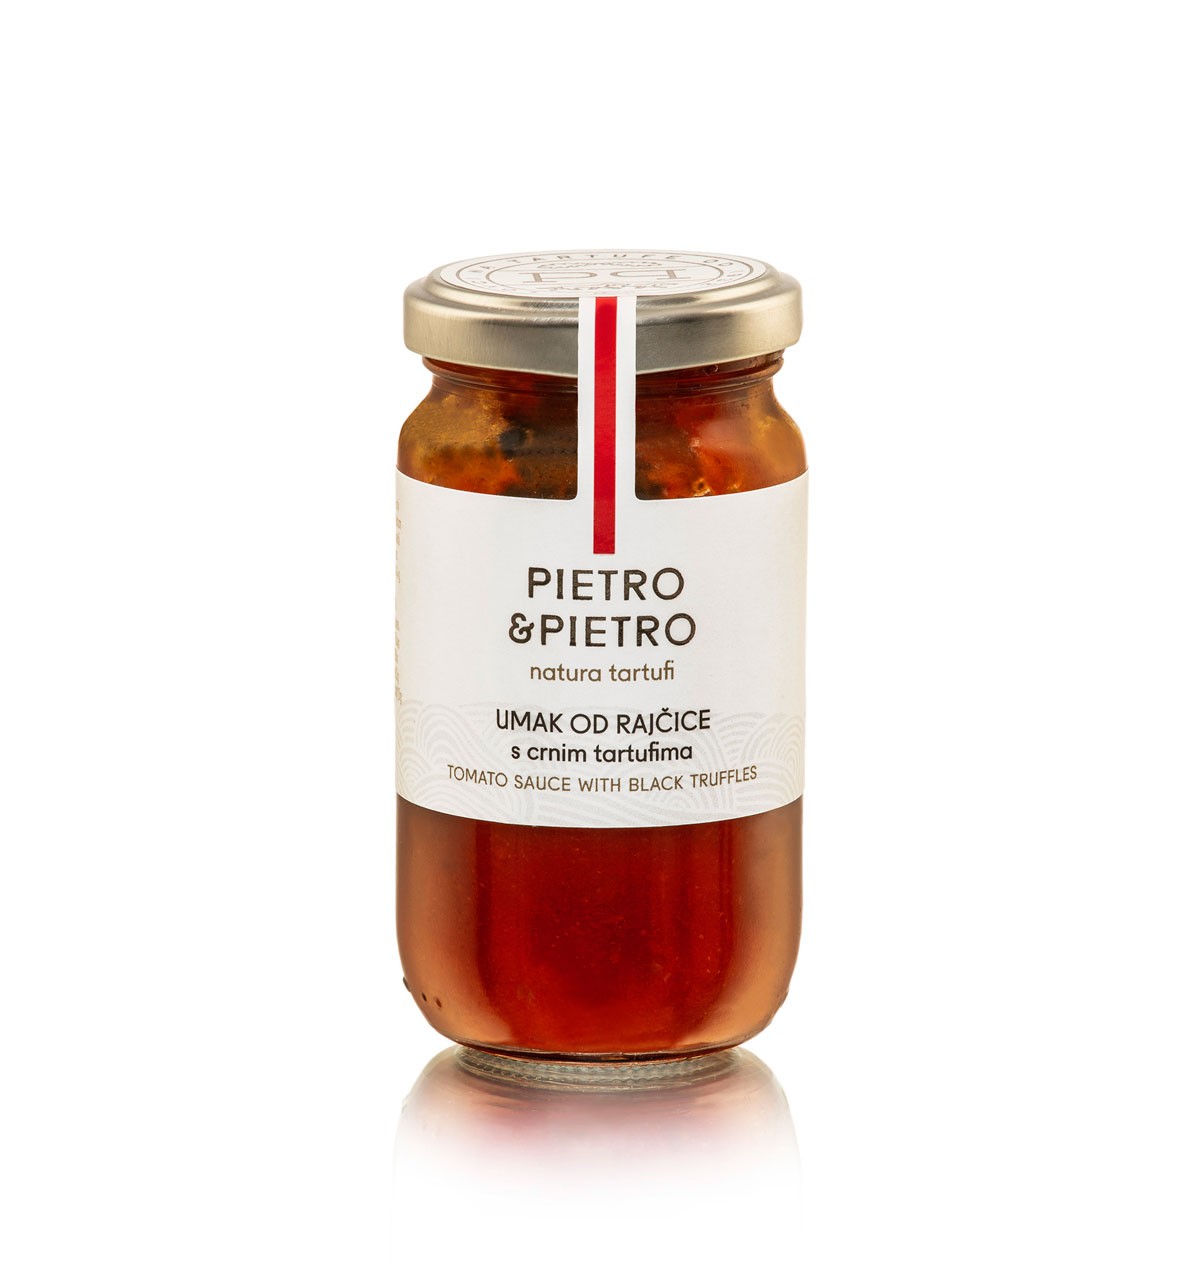 salsa di pomodoro al tartufo nero, Pietro & Pietro by Natura Tartufi
